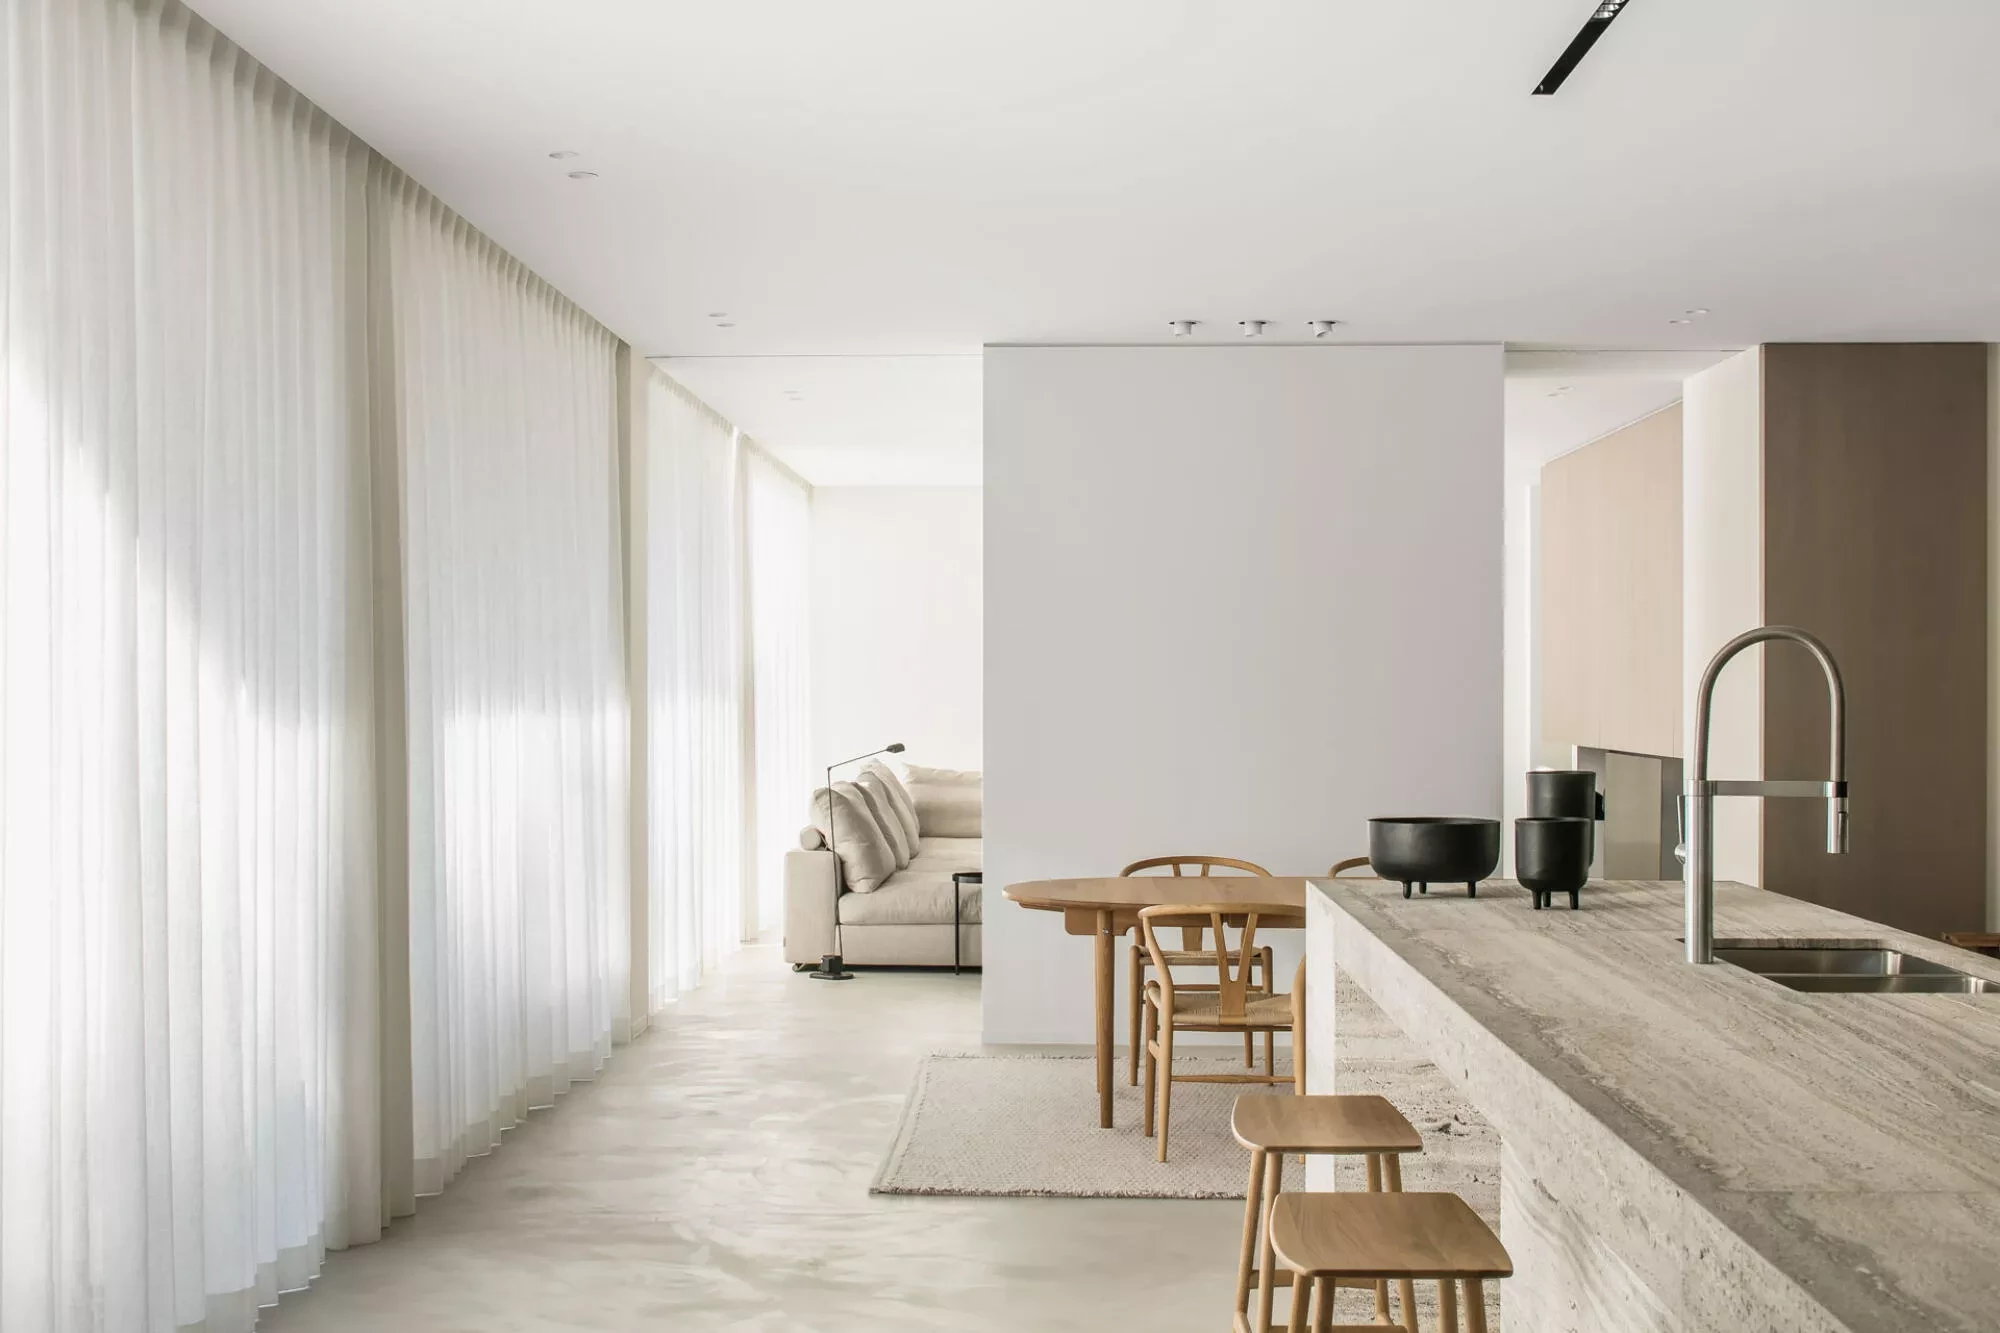 Thalostuc floor finish extending between kitchen and living room inside interior by Pieter Vanrenterghem